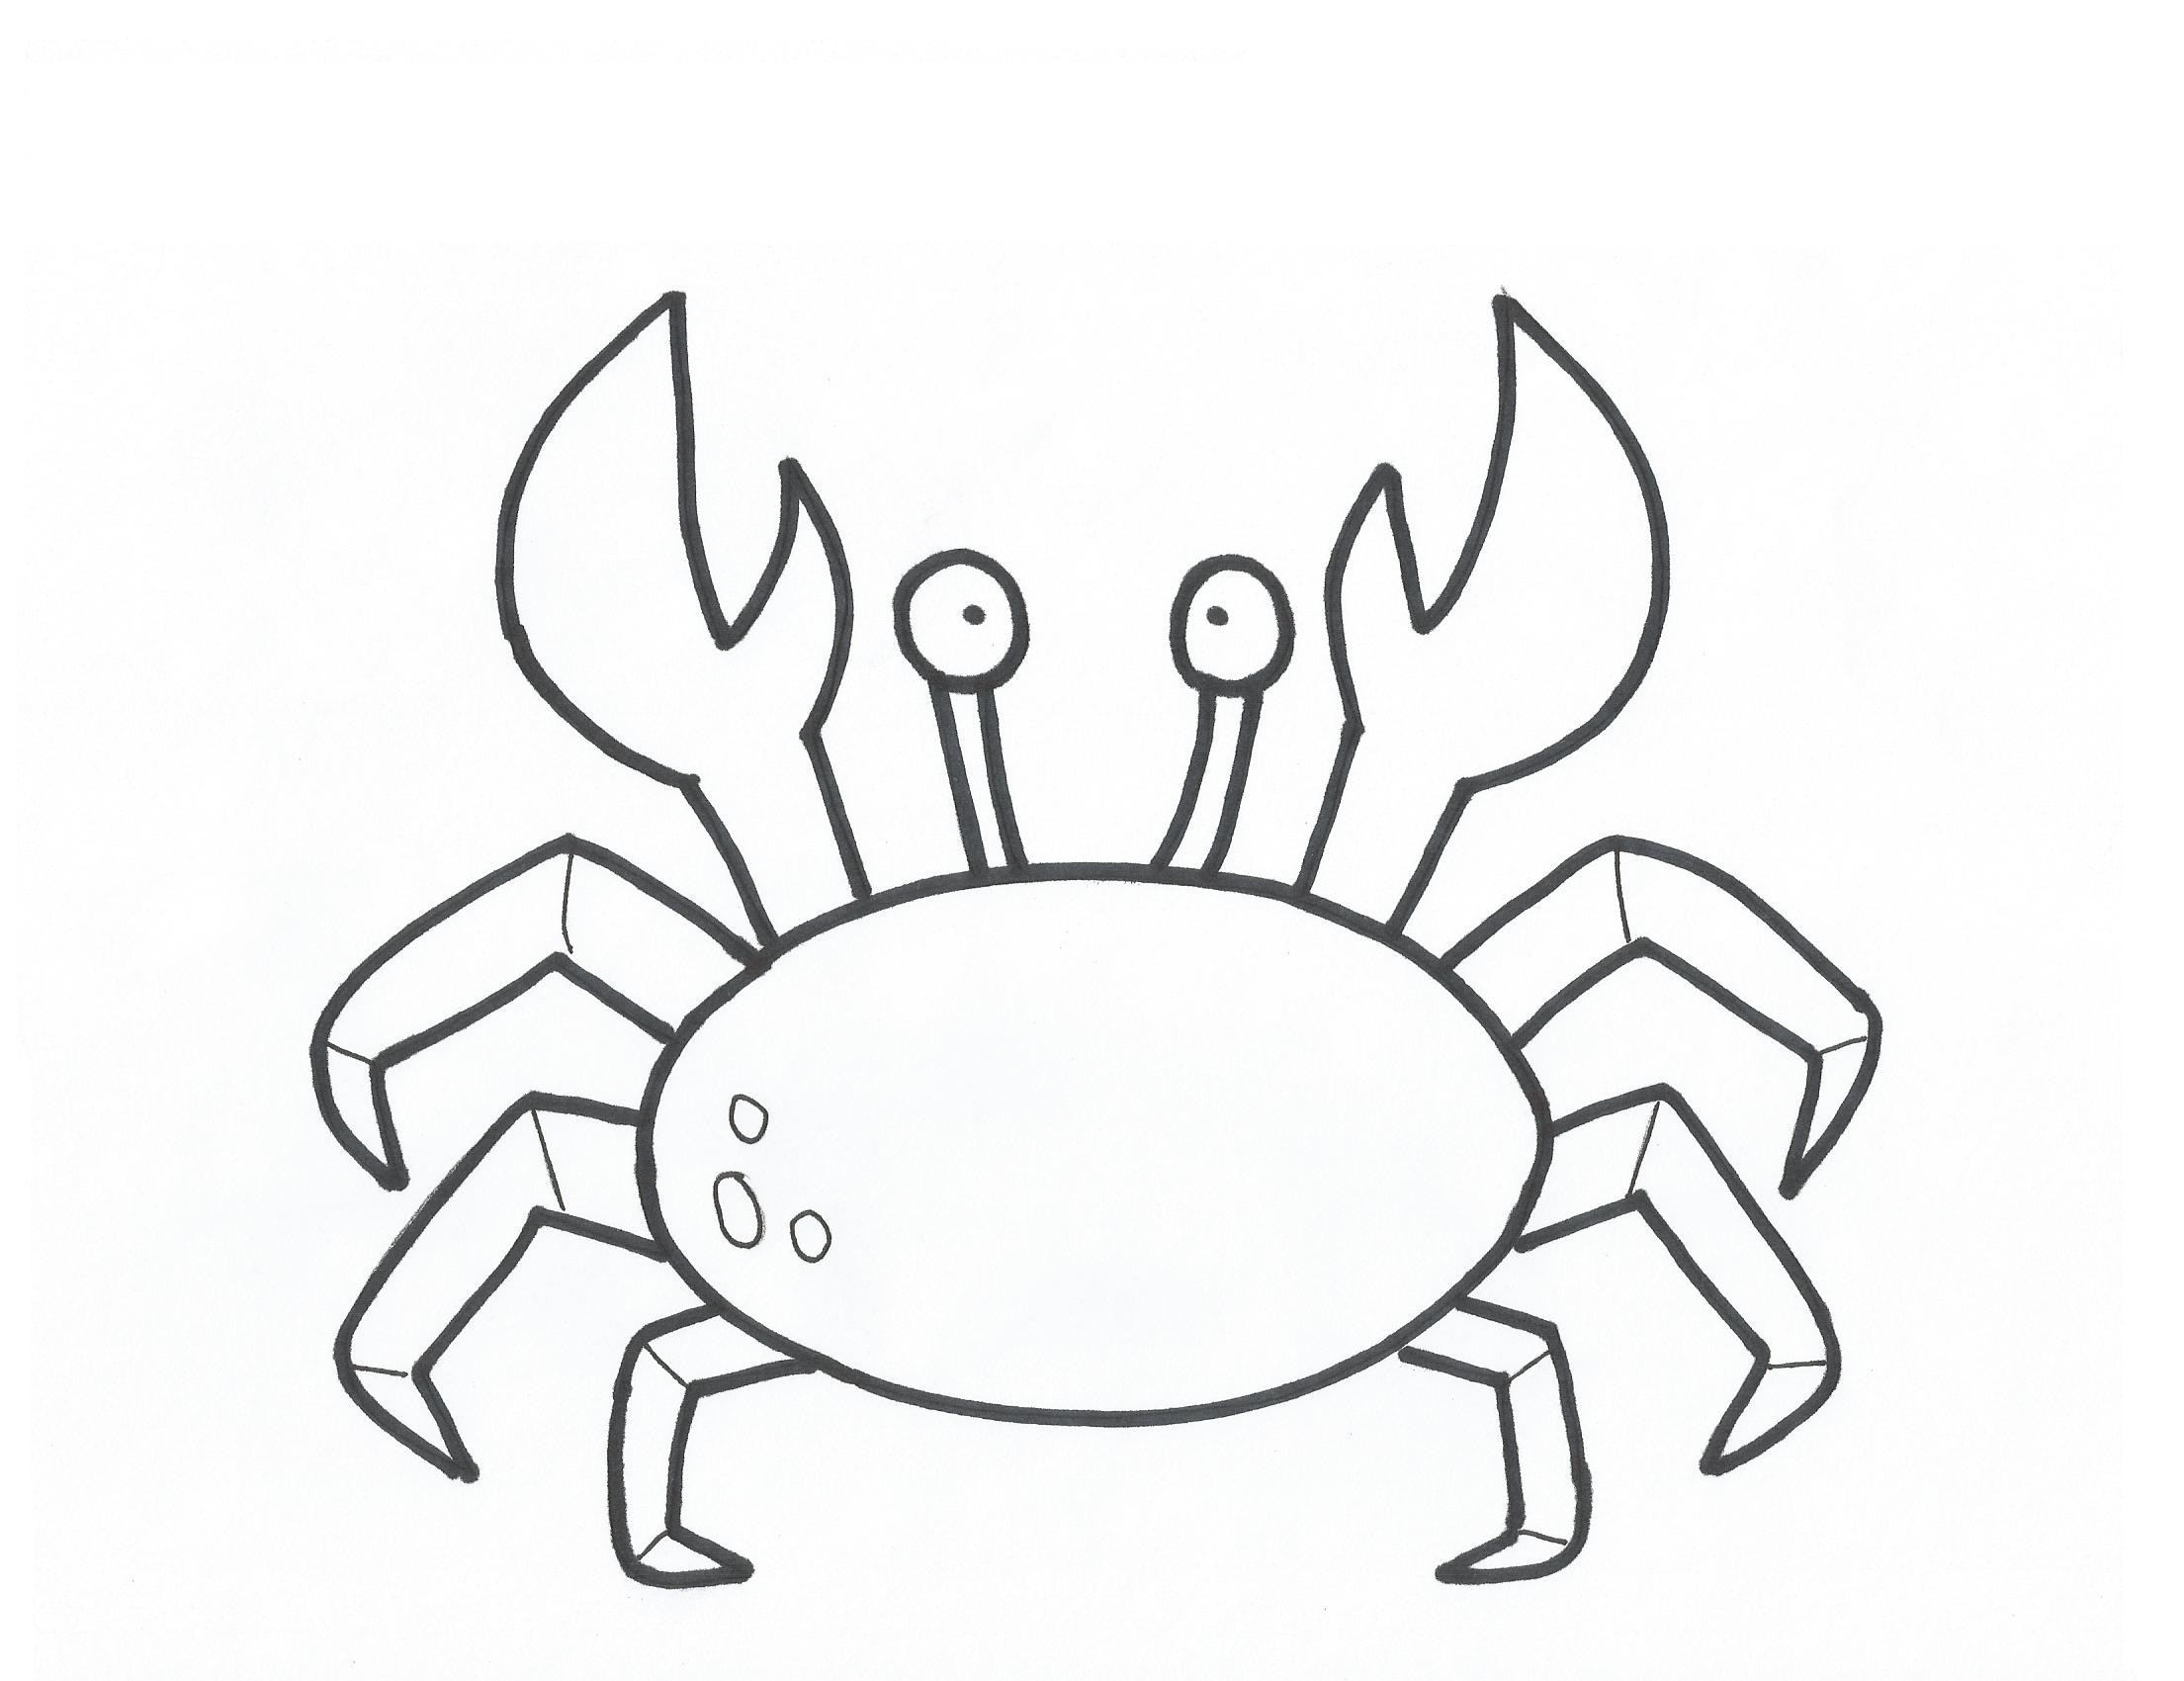 Printable Crab Template